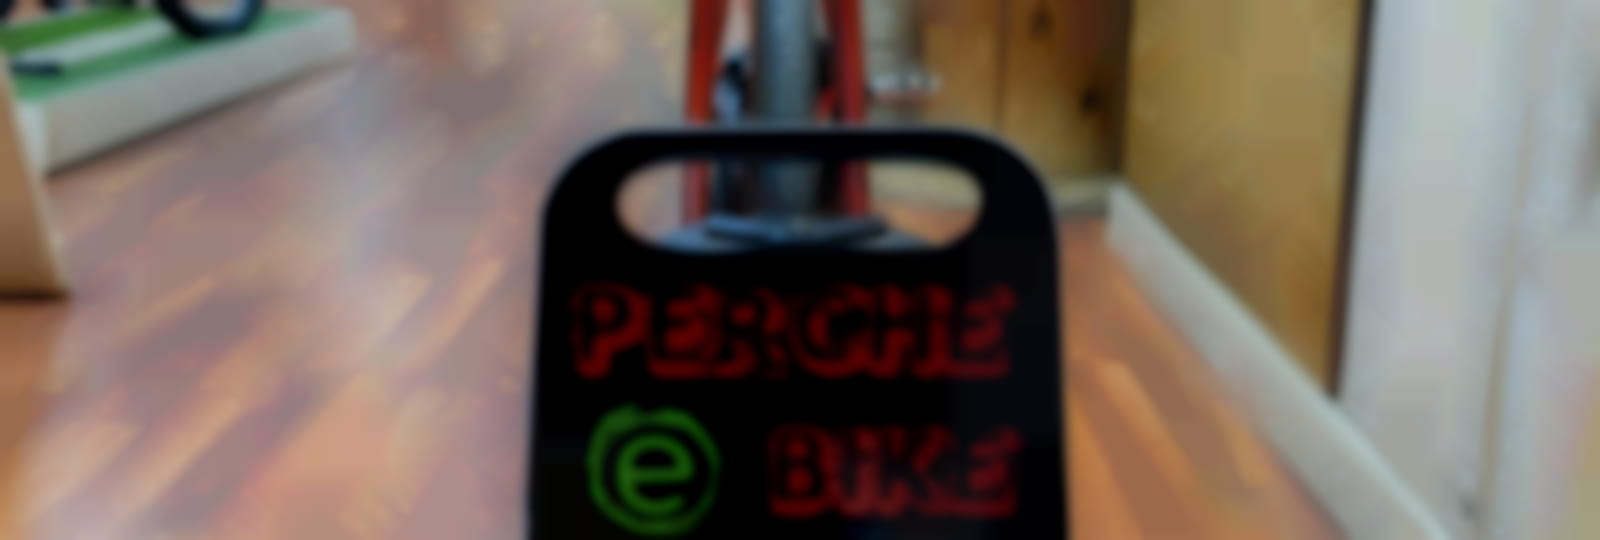 Perche Bike